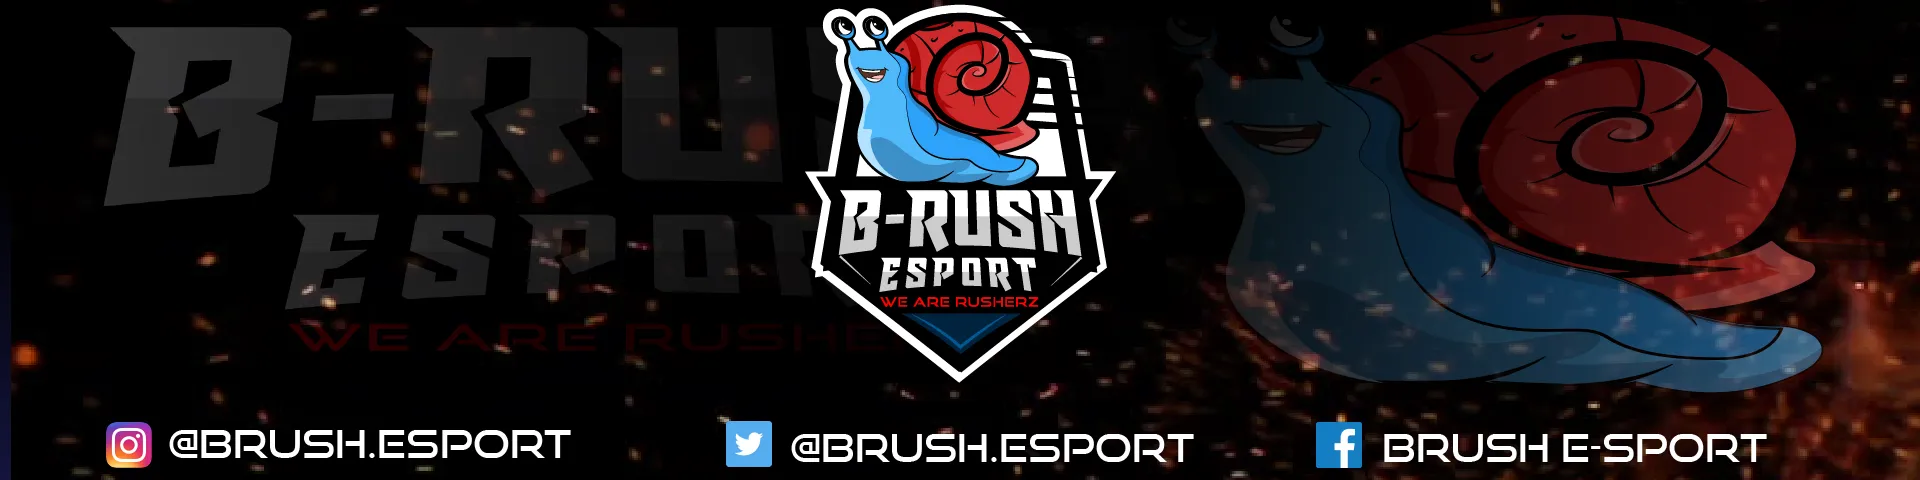 bRush eSport banner